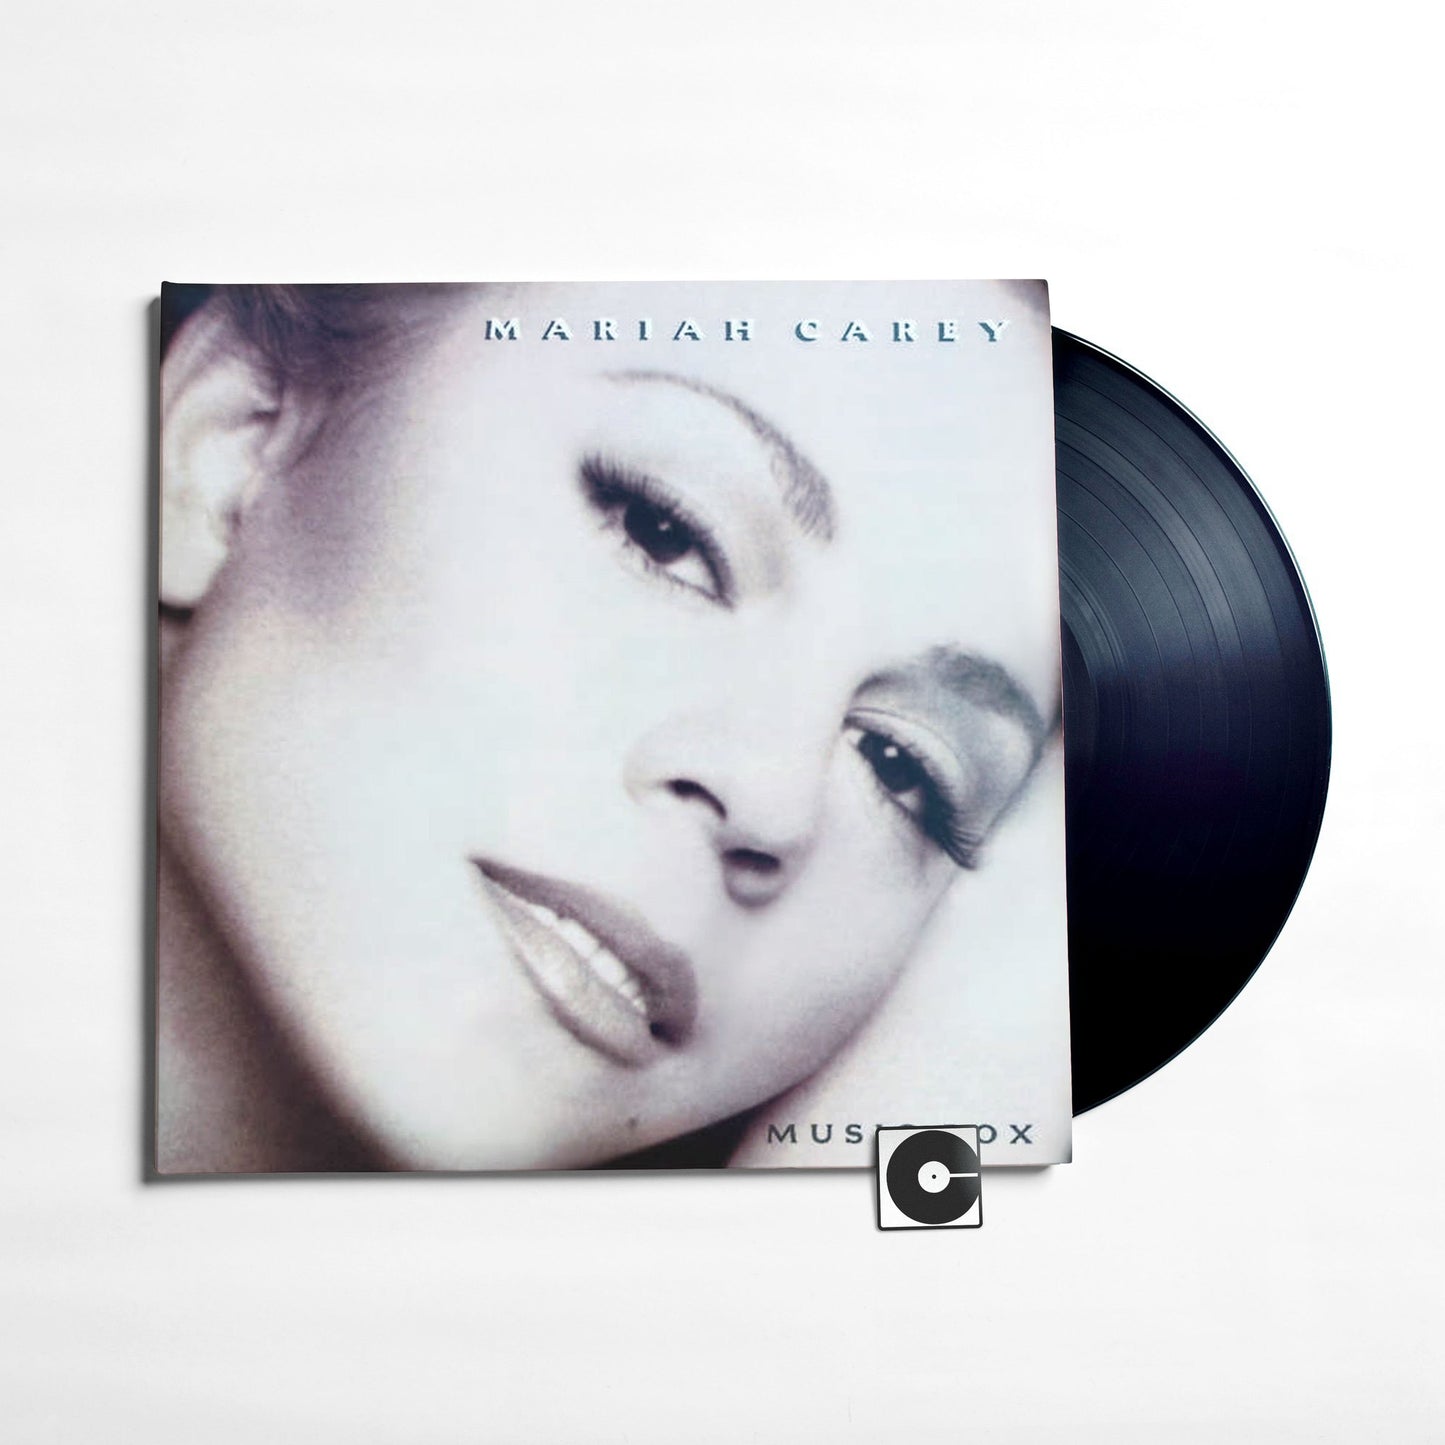 Mariah Carey - "Music Box"